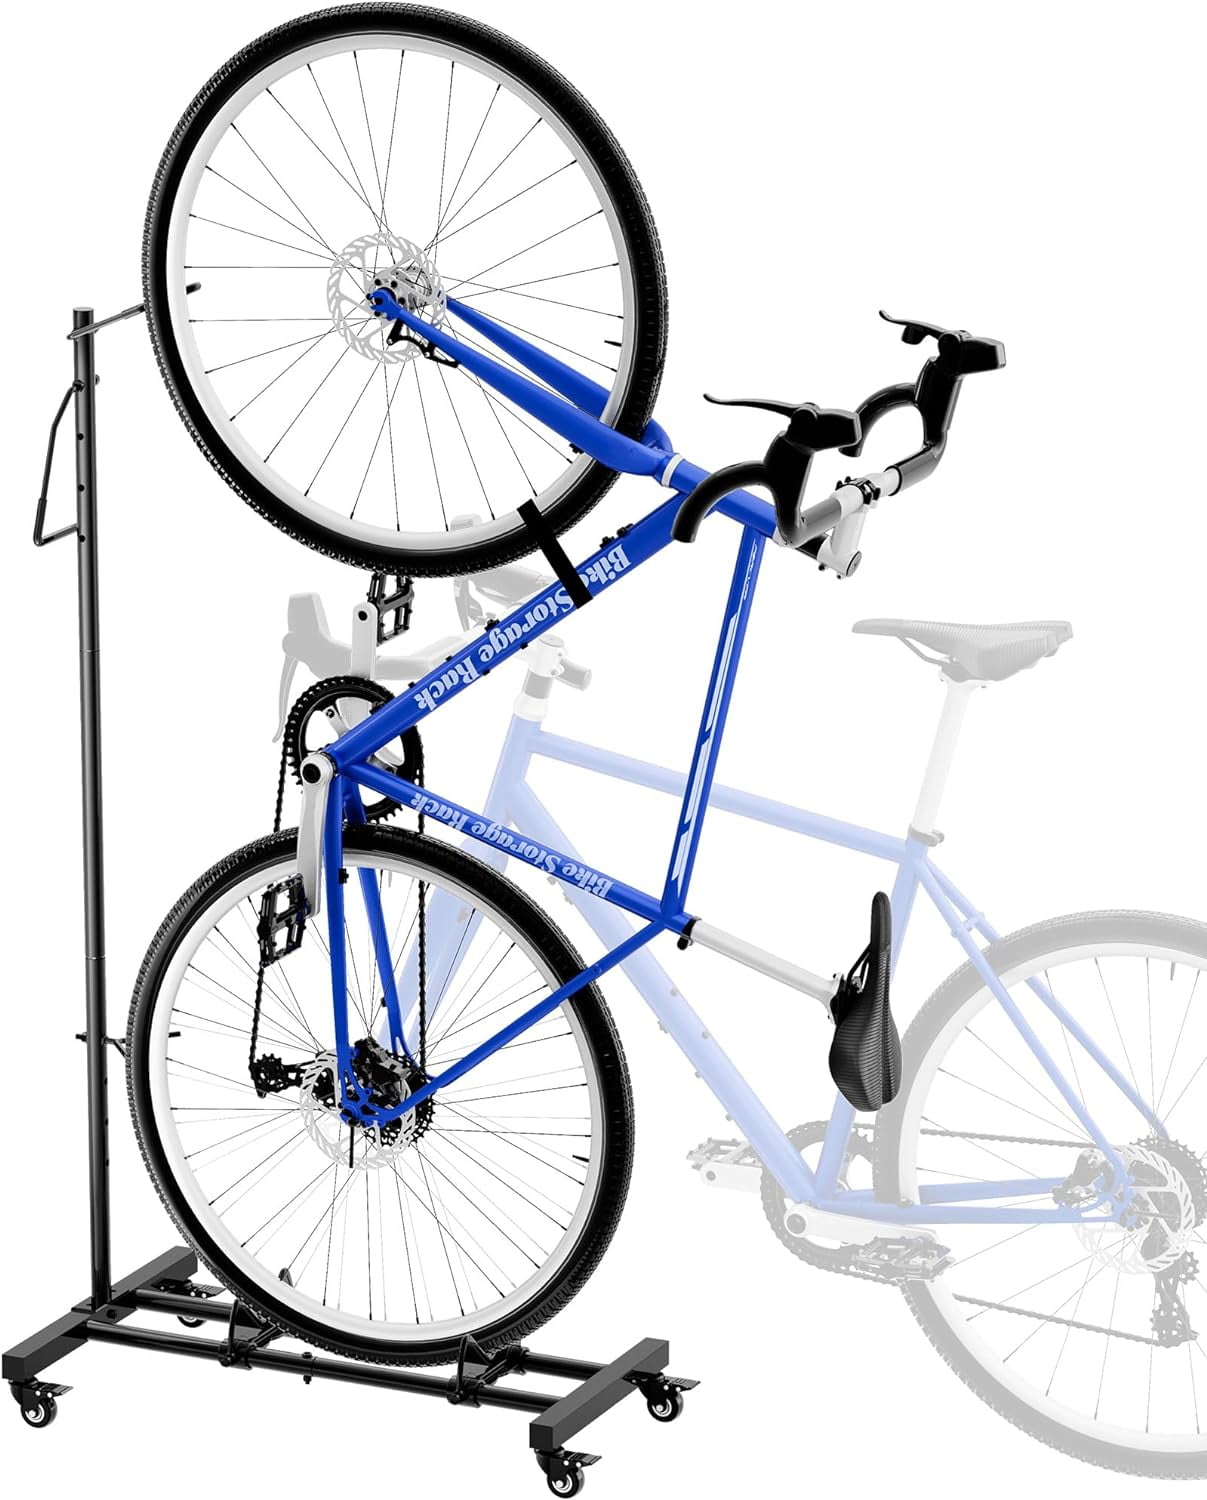 CyclingDeal Upright Bike Stand - Premium Quality Vertical & Horizontal